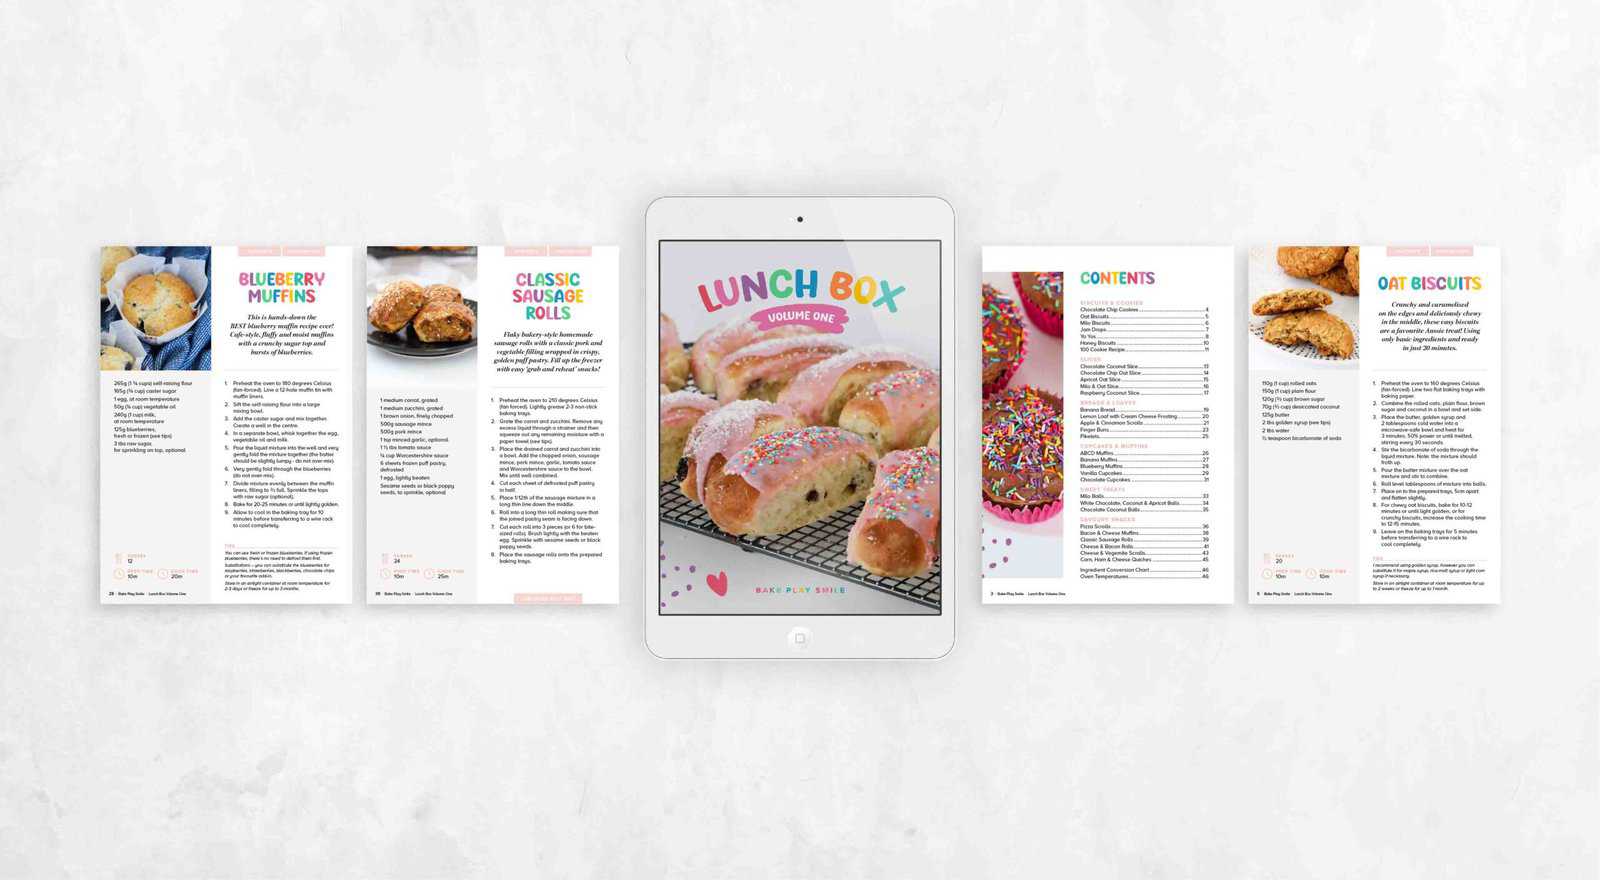 a lunch box recipes ebook